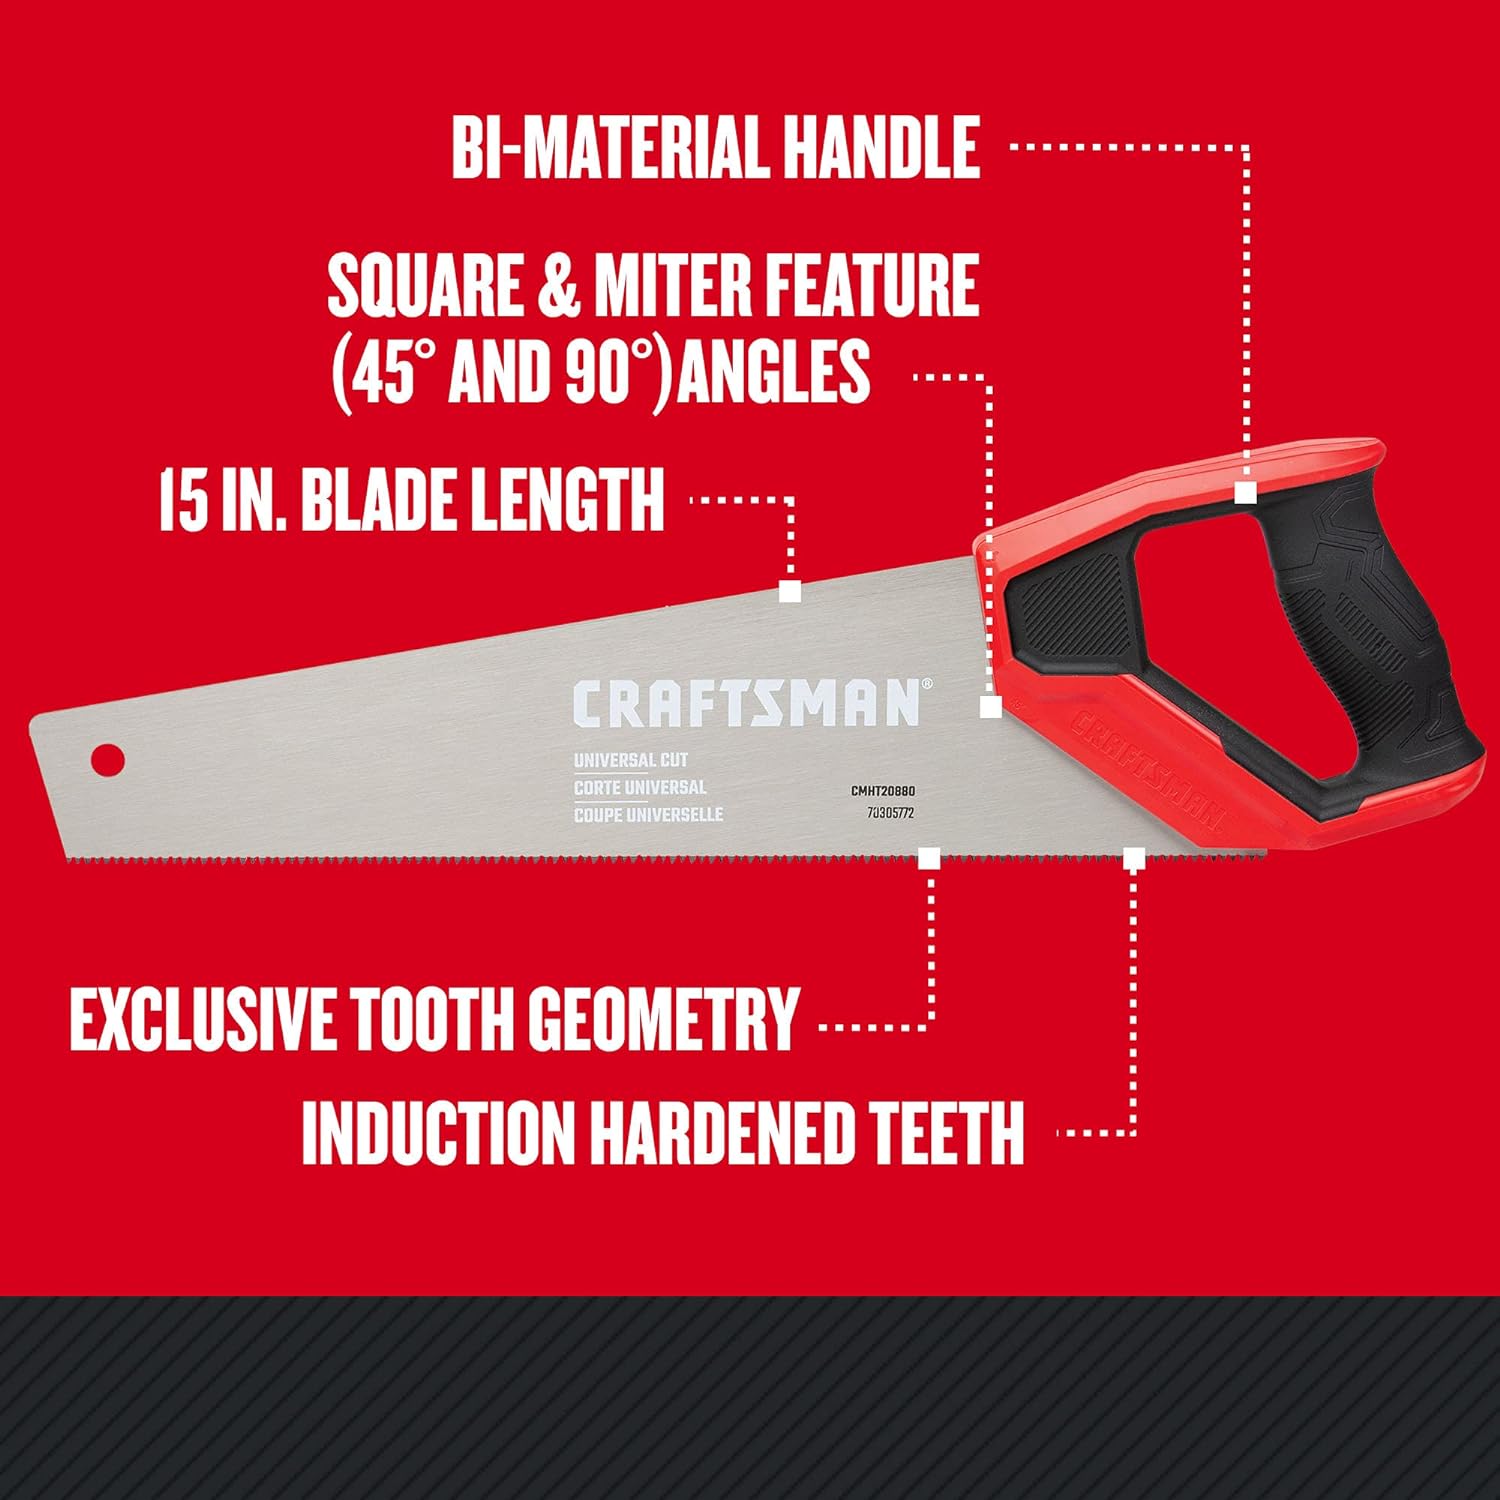 Craftsman Hand Saw,Steel Blade,15" Blade Length  CMHT20880 - image 2 of 8